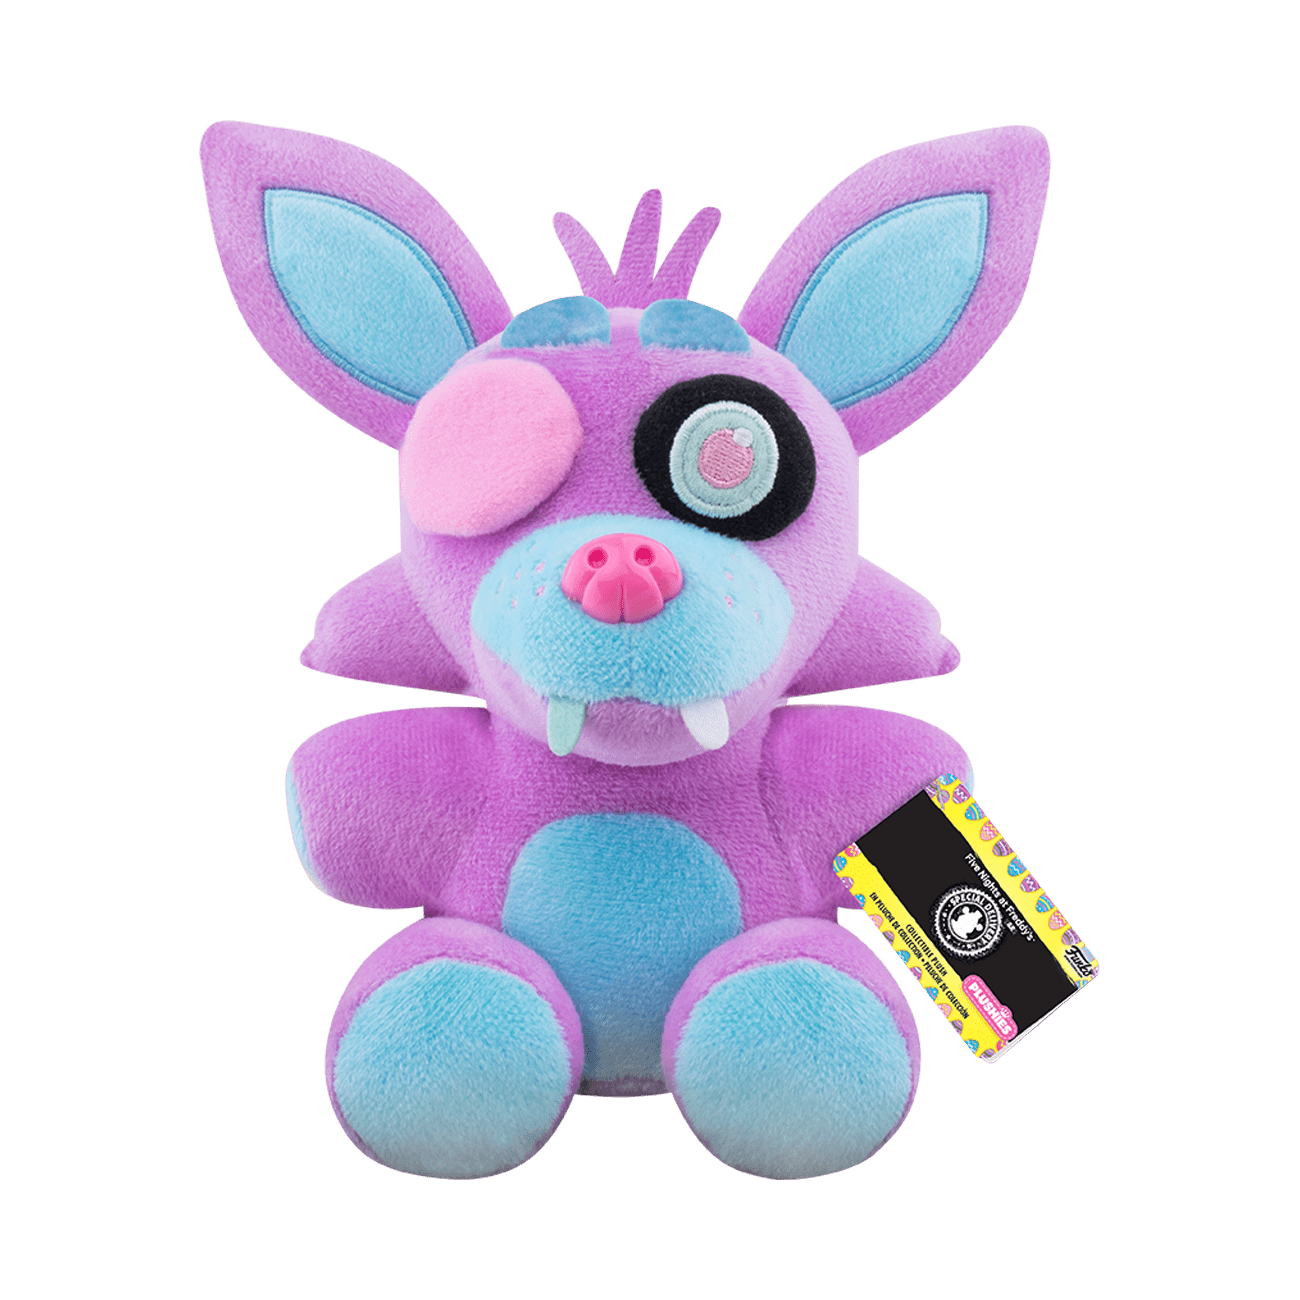 Funko Plush: Five Nights at Freddy's - Spring Colorway - Foxy (Purple) 